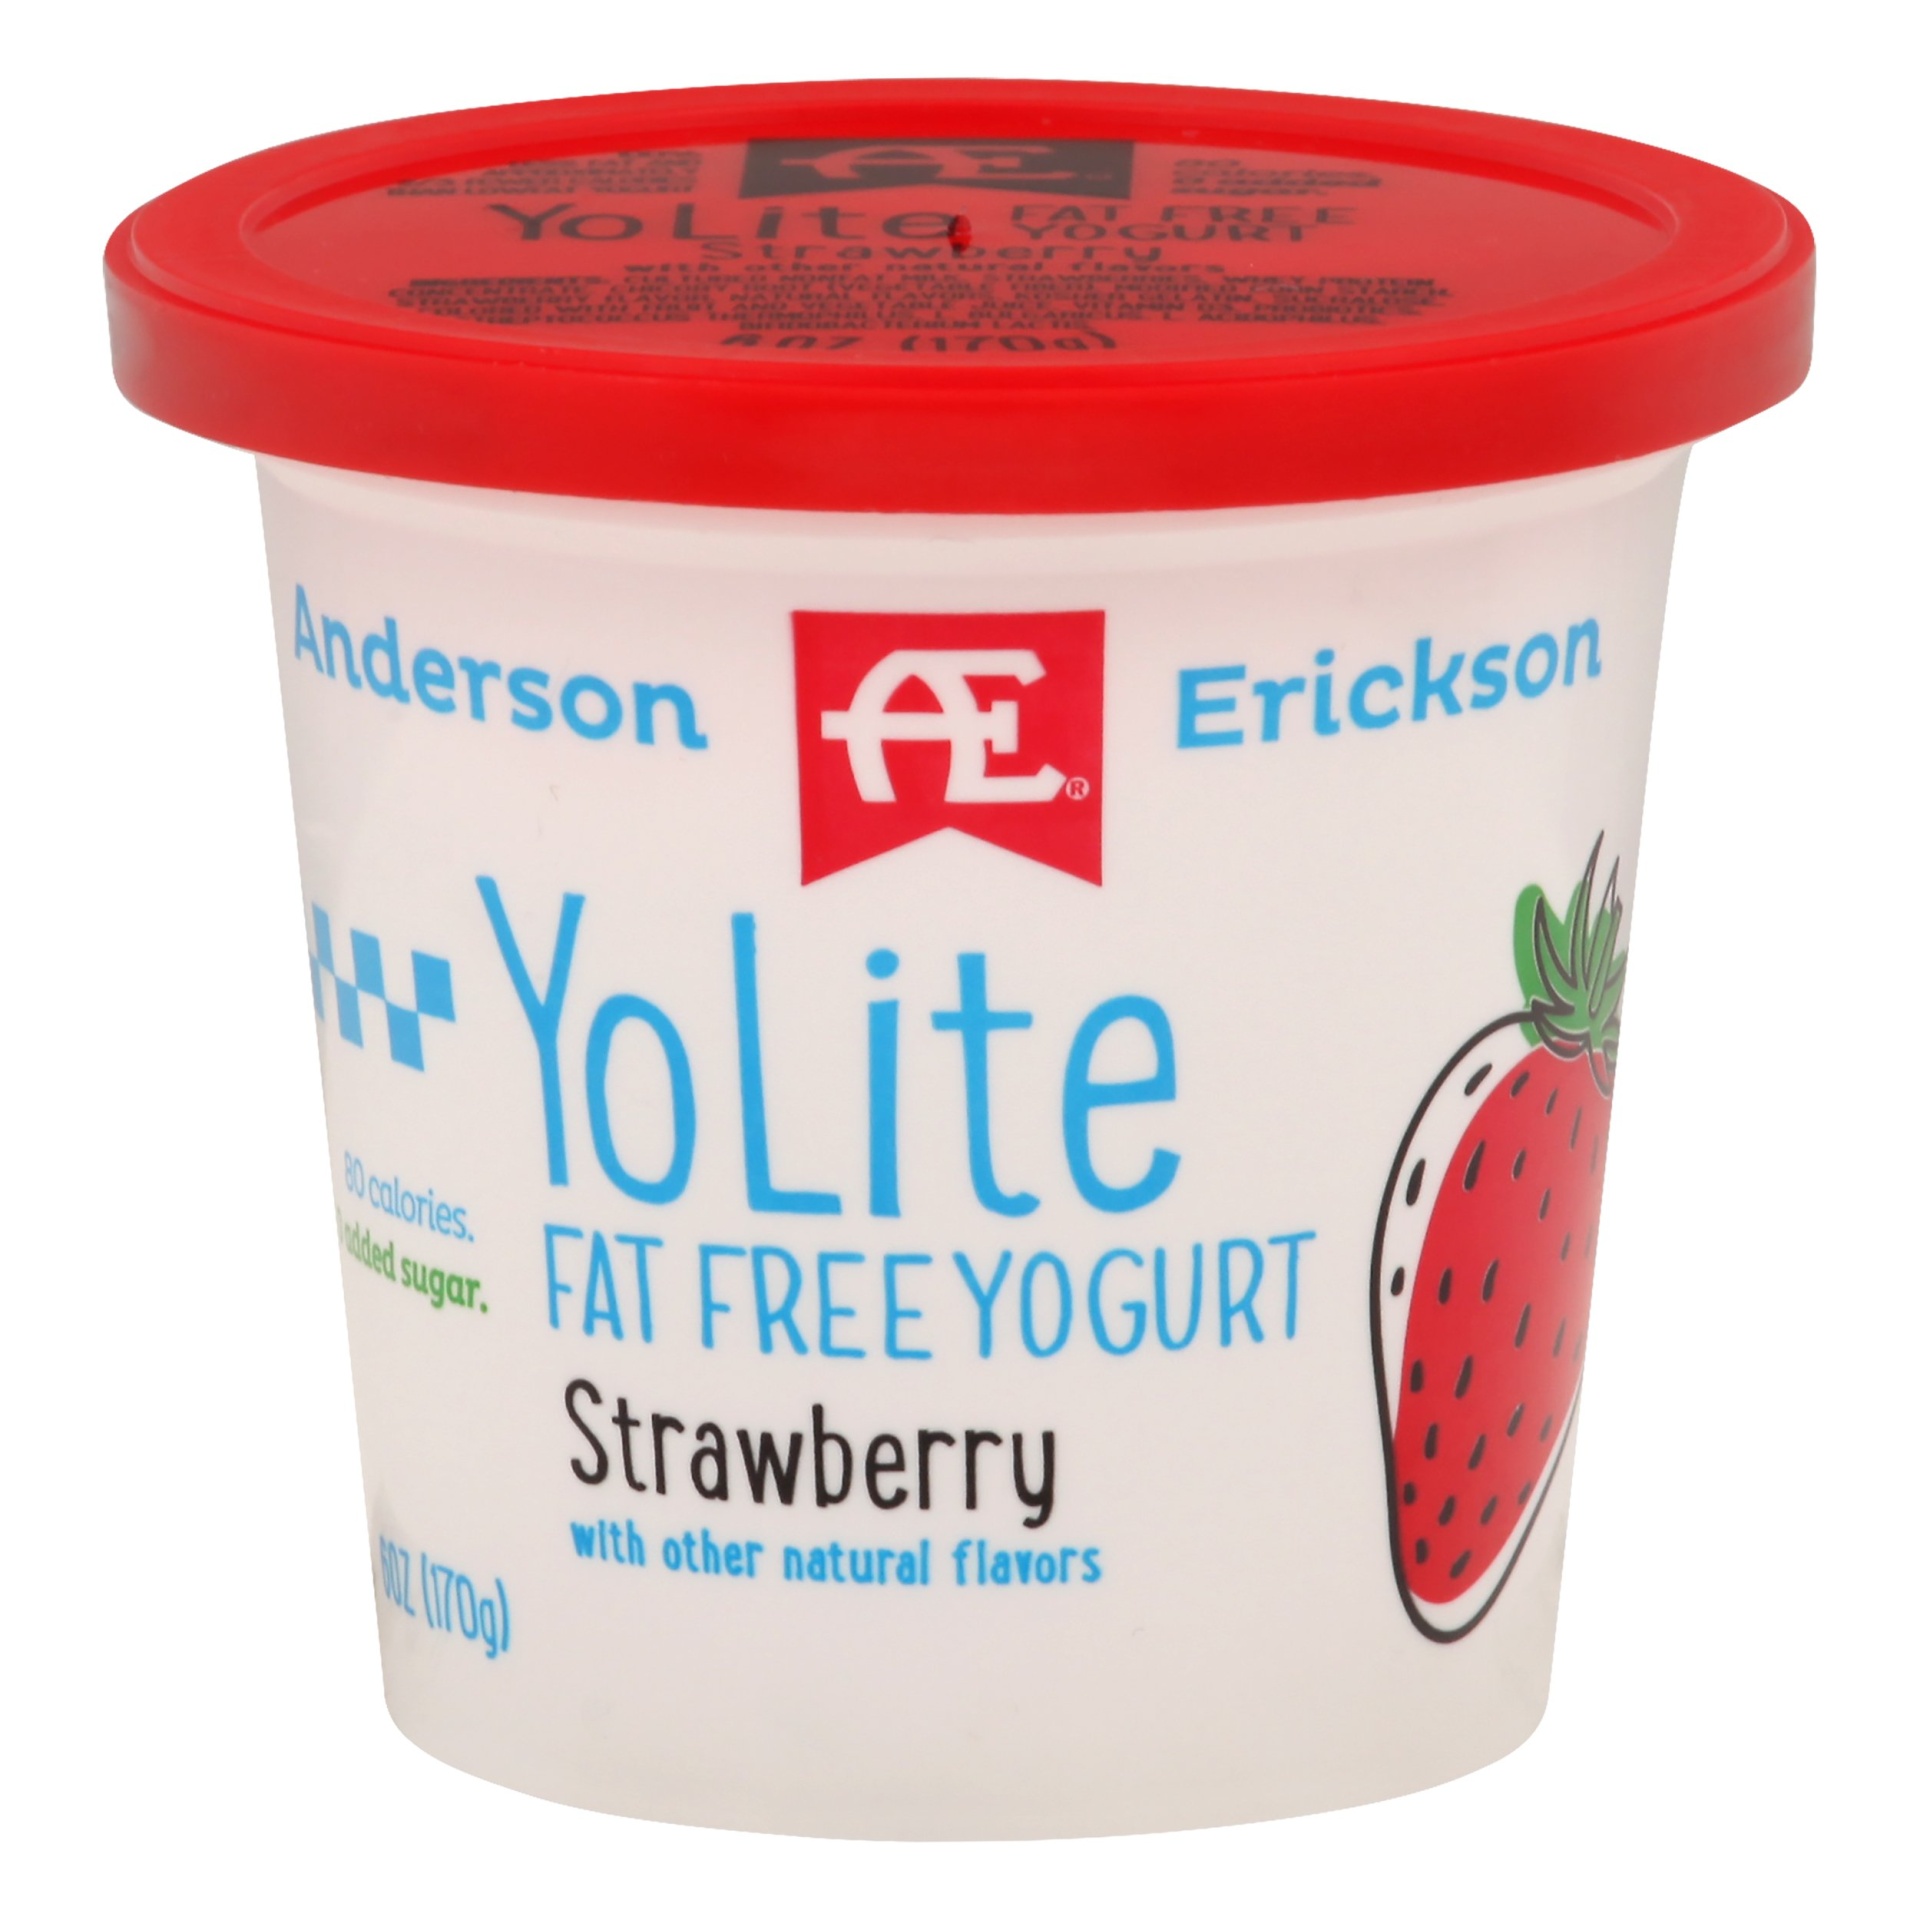 slide 1 of 1, AE Dairy Yolite Strawberry Fat Free Yogurt, 6 oz